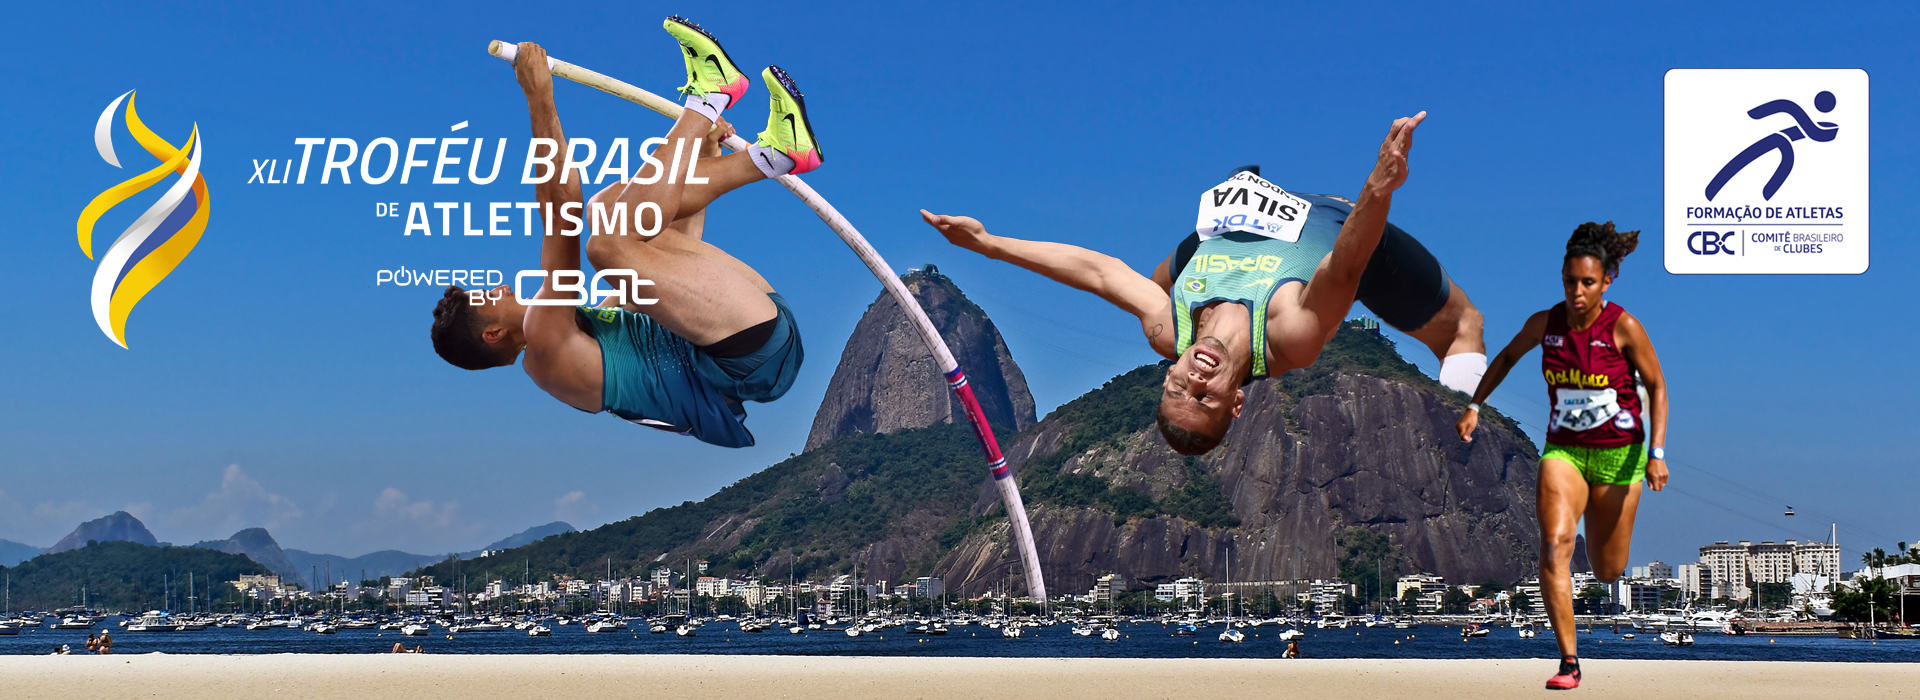 http://www.cbclubes.org.br/sites/default/files/2022-06/img_Tbrasil-atletismo_site_220603_01.jpg